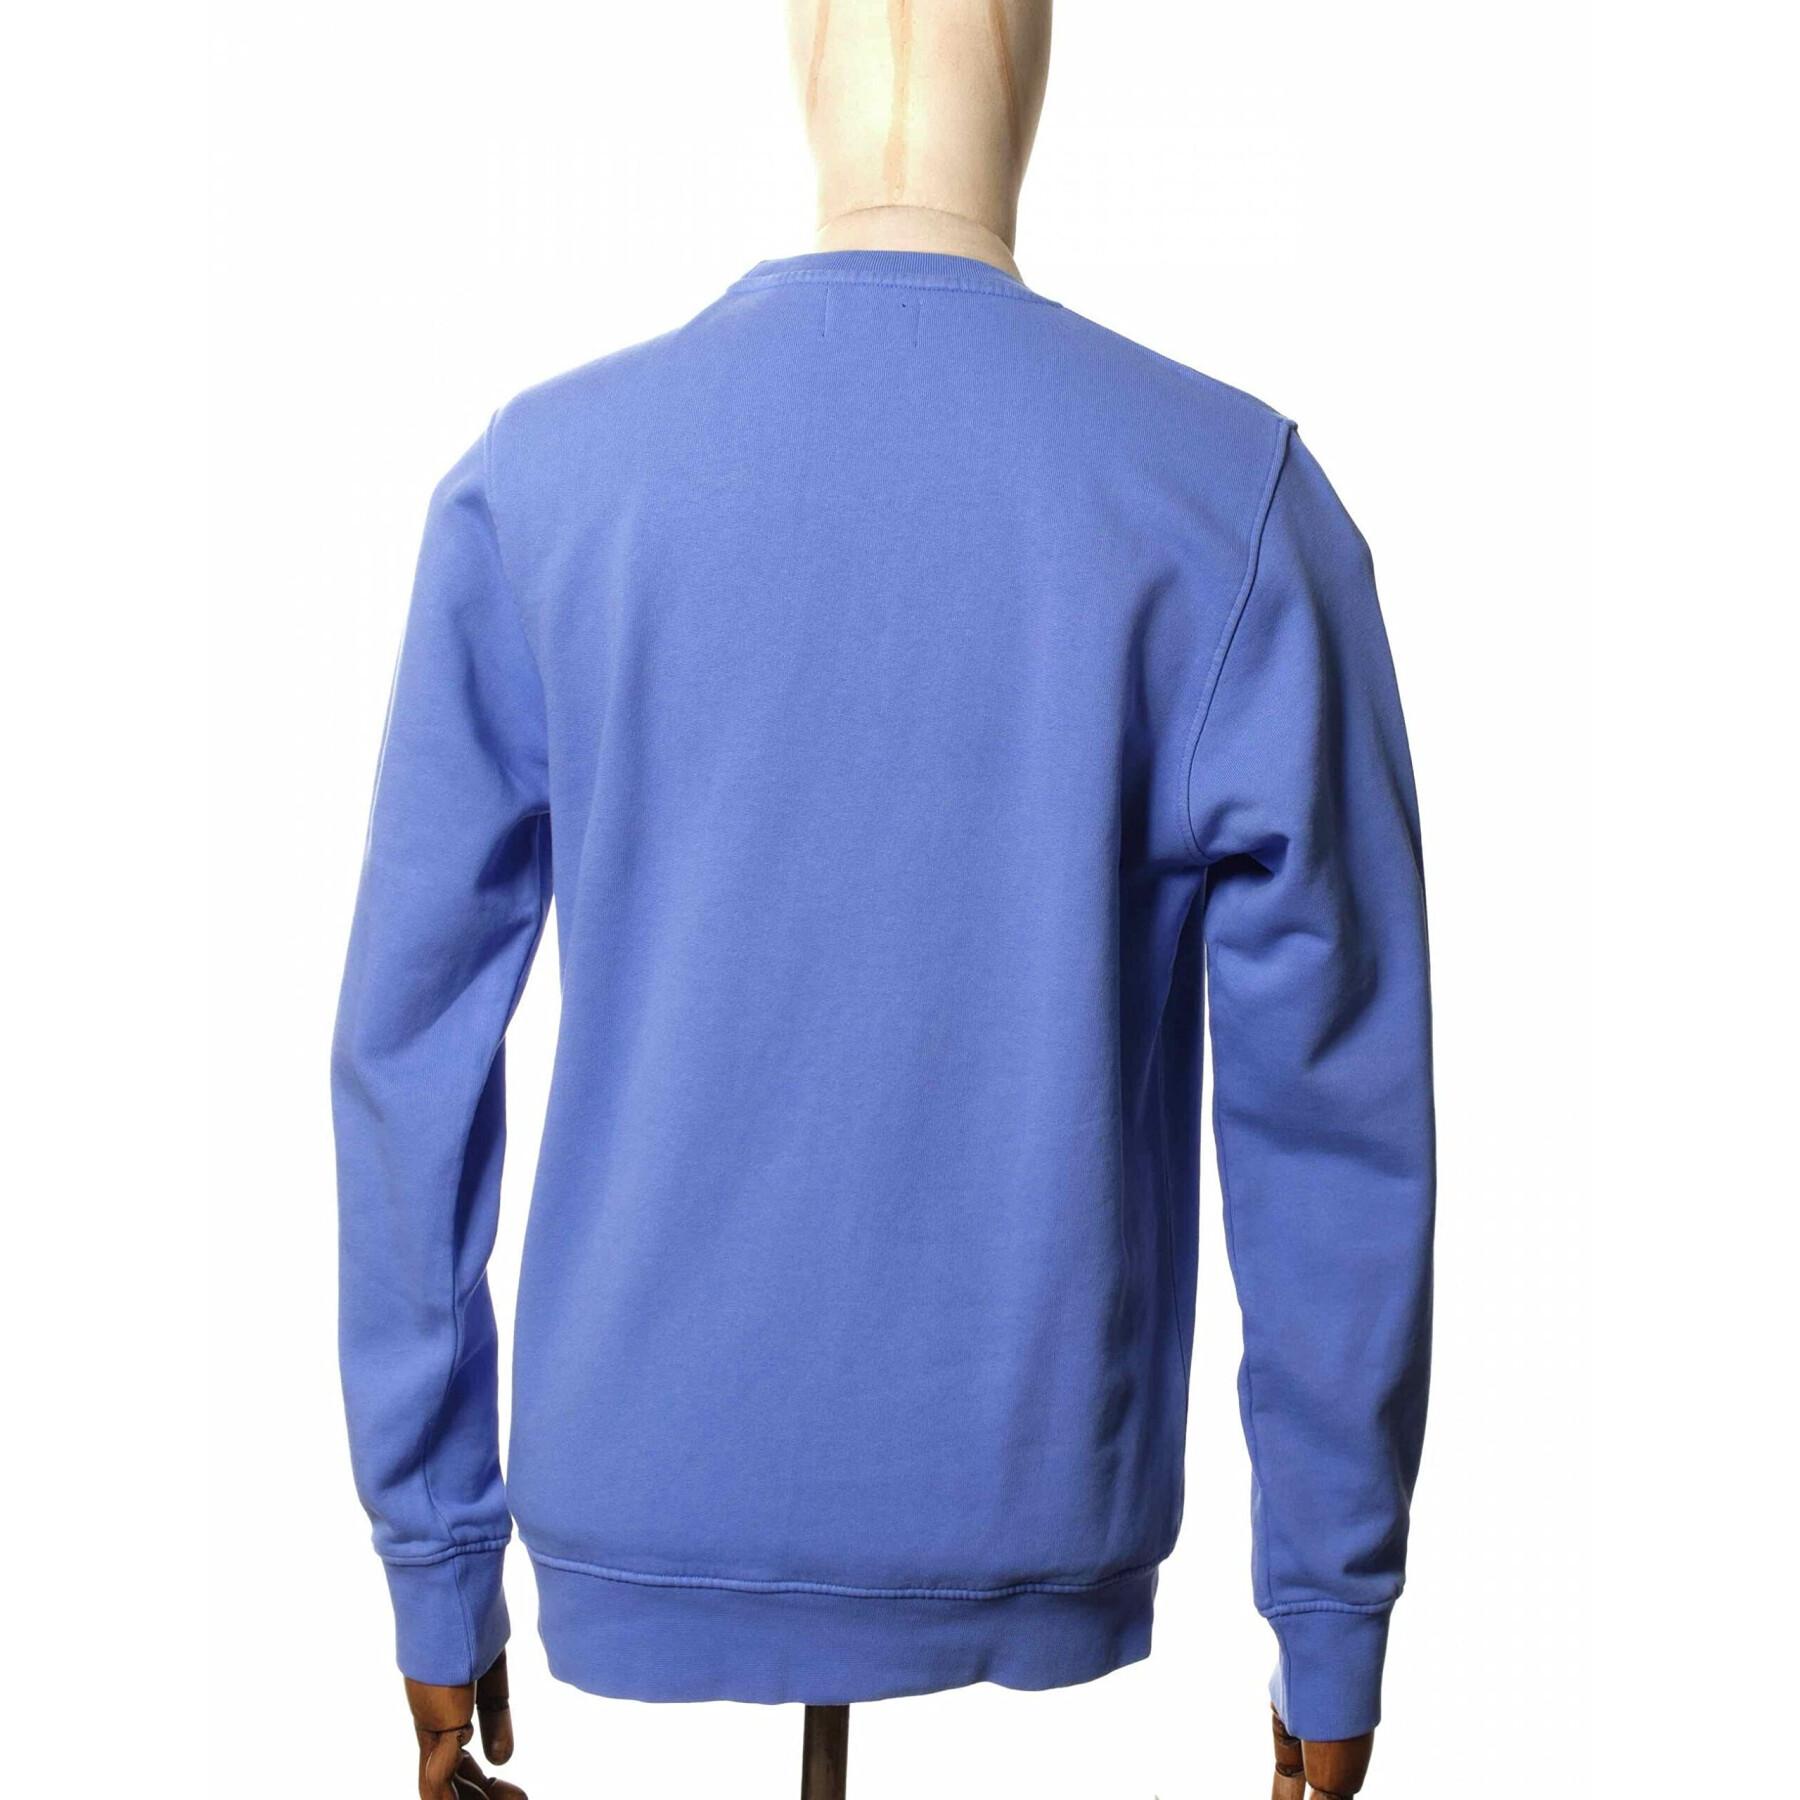 Sweatshirt round neck Colorful Standard Classic Organic sky blue